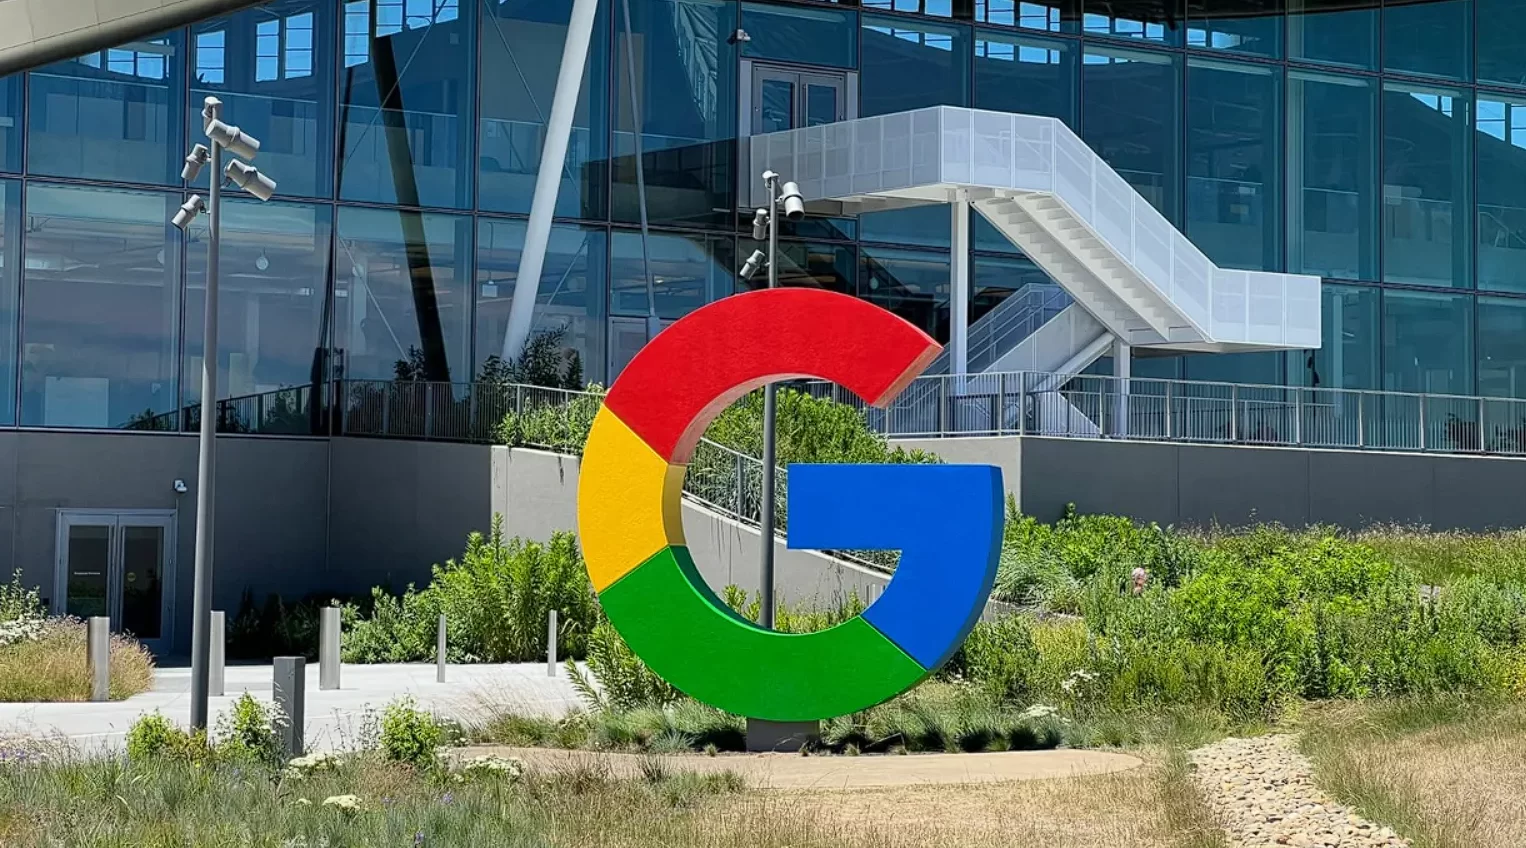 Google Bard | Google | Google กำลังพัฒนา Search Engine ที่ใช้ AI ช่วยประมวลผล